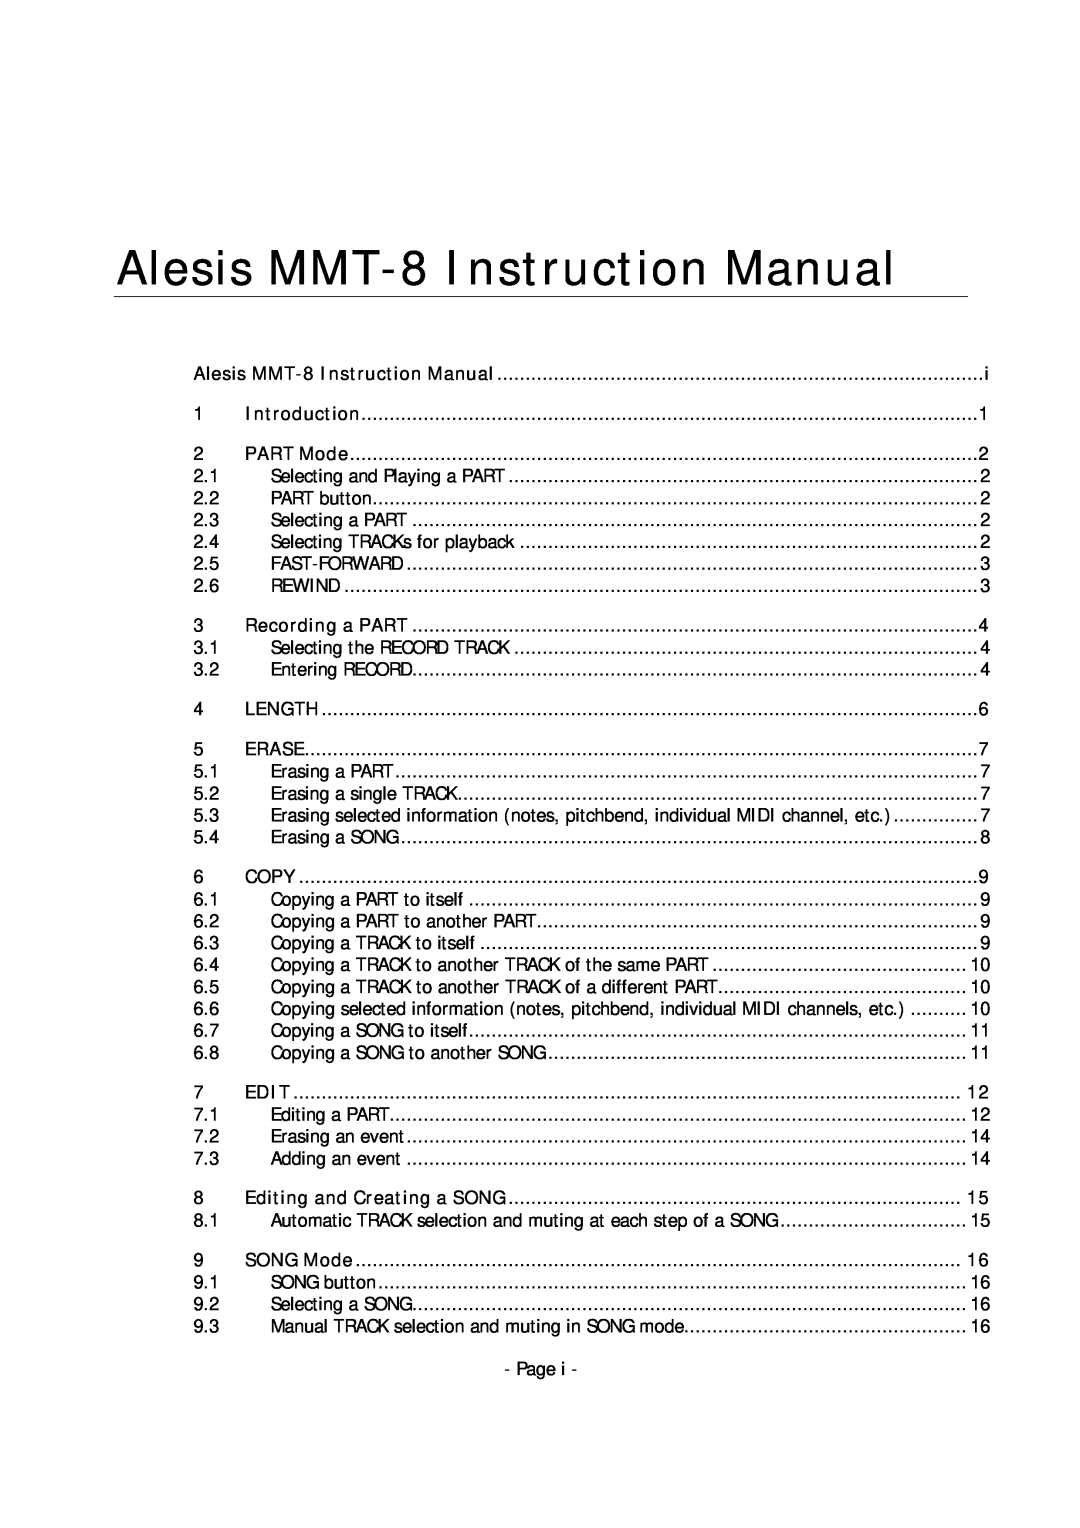 Alesis MMT-8 manual 